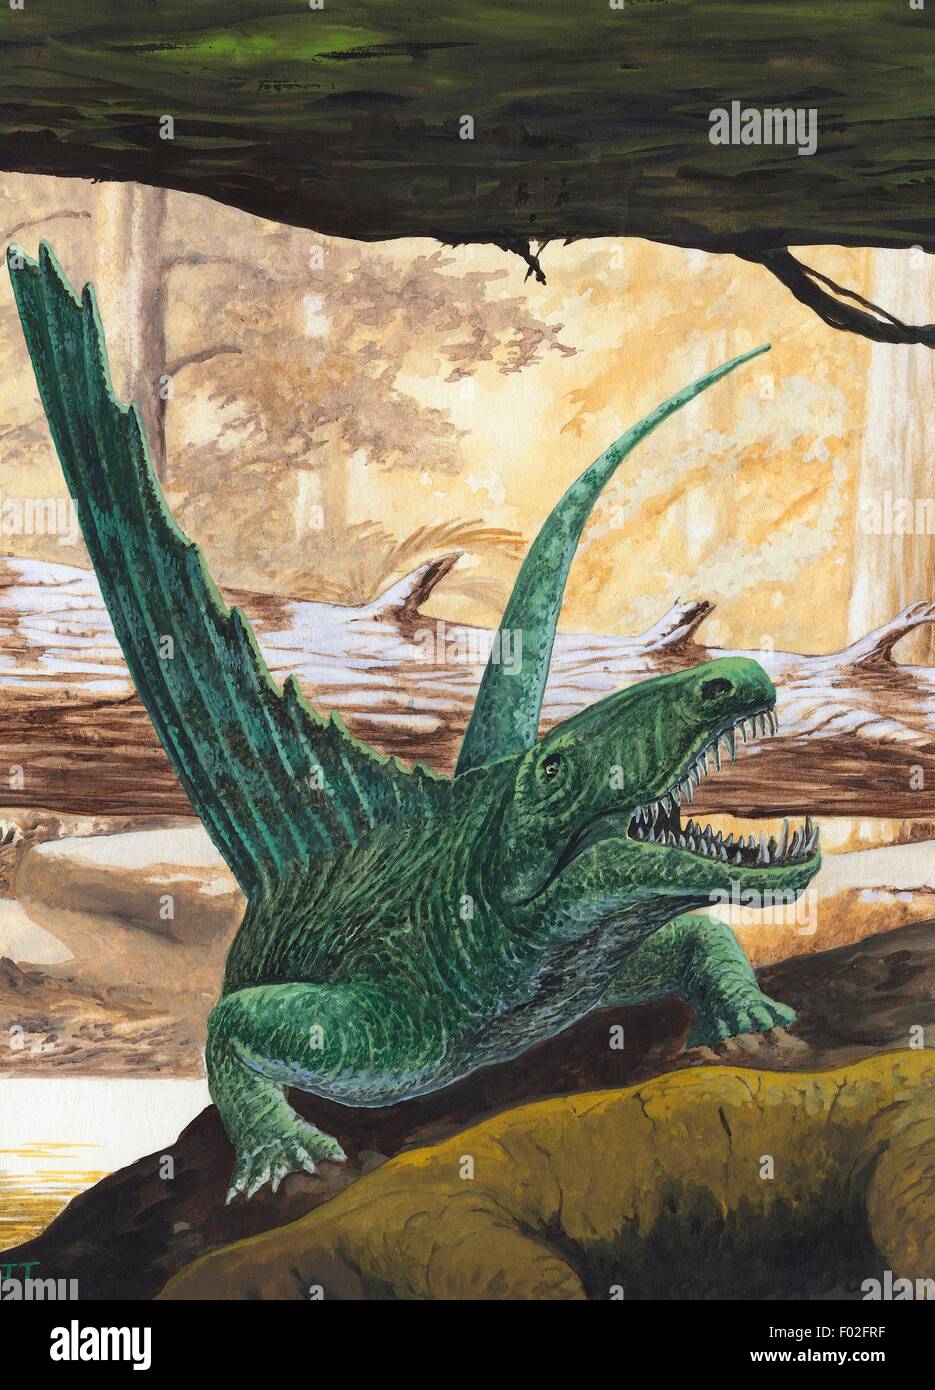 Dimetrodon sp, Sphenacodontidae, Early Permian. Artwork by J Dang. Stock Photo